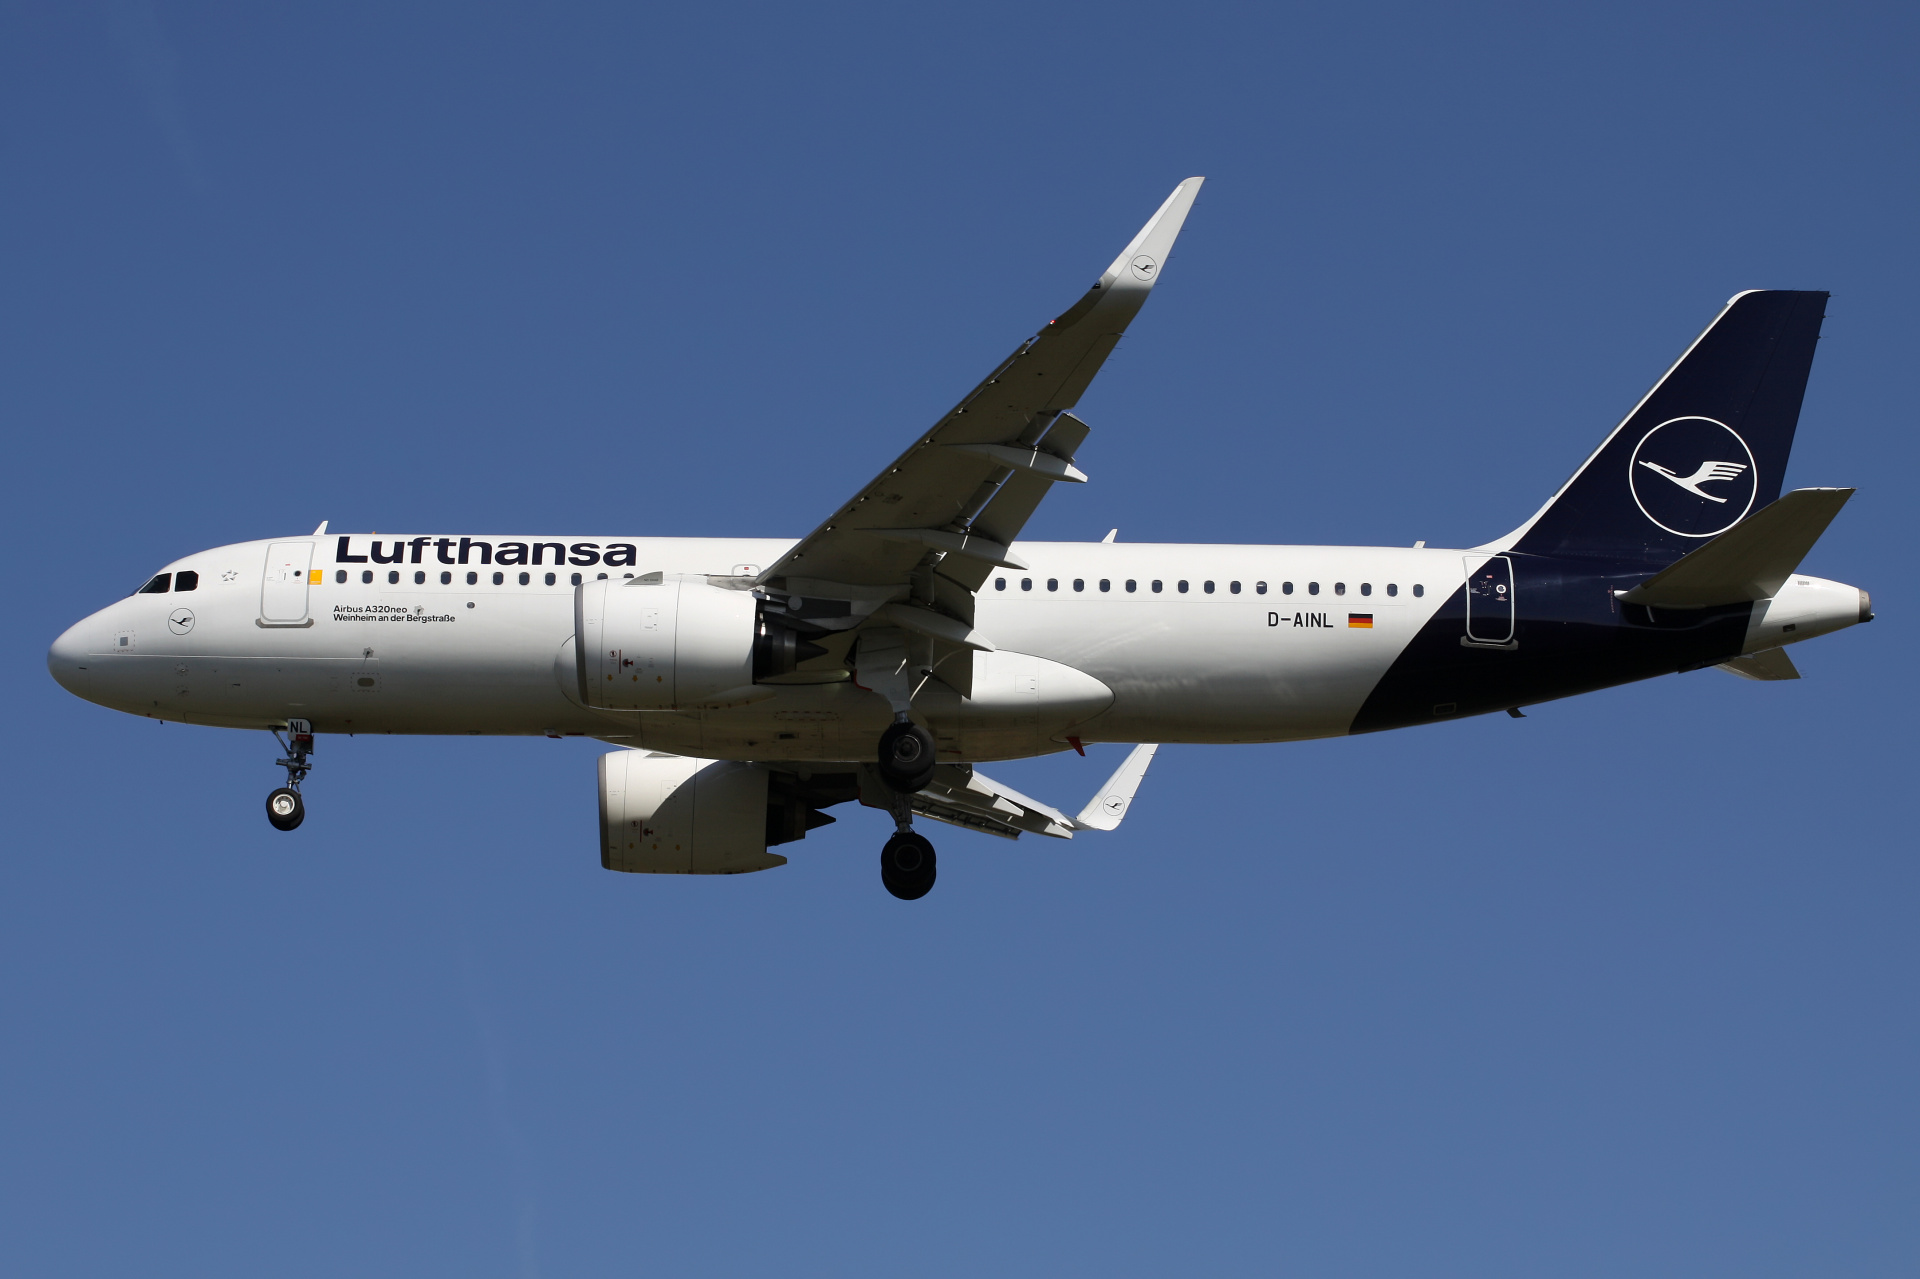 D-AINL (Aircraft » EPWA Spotting » Airbus A320neo » Lufthansa)